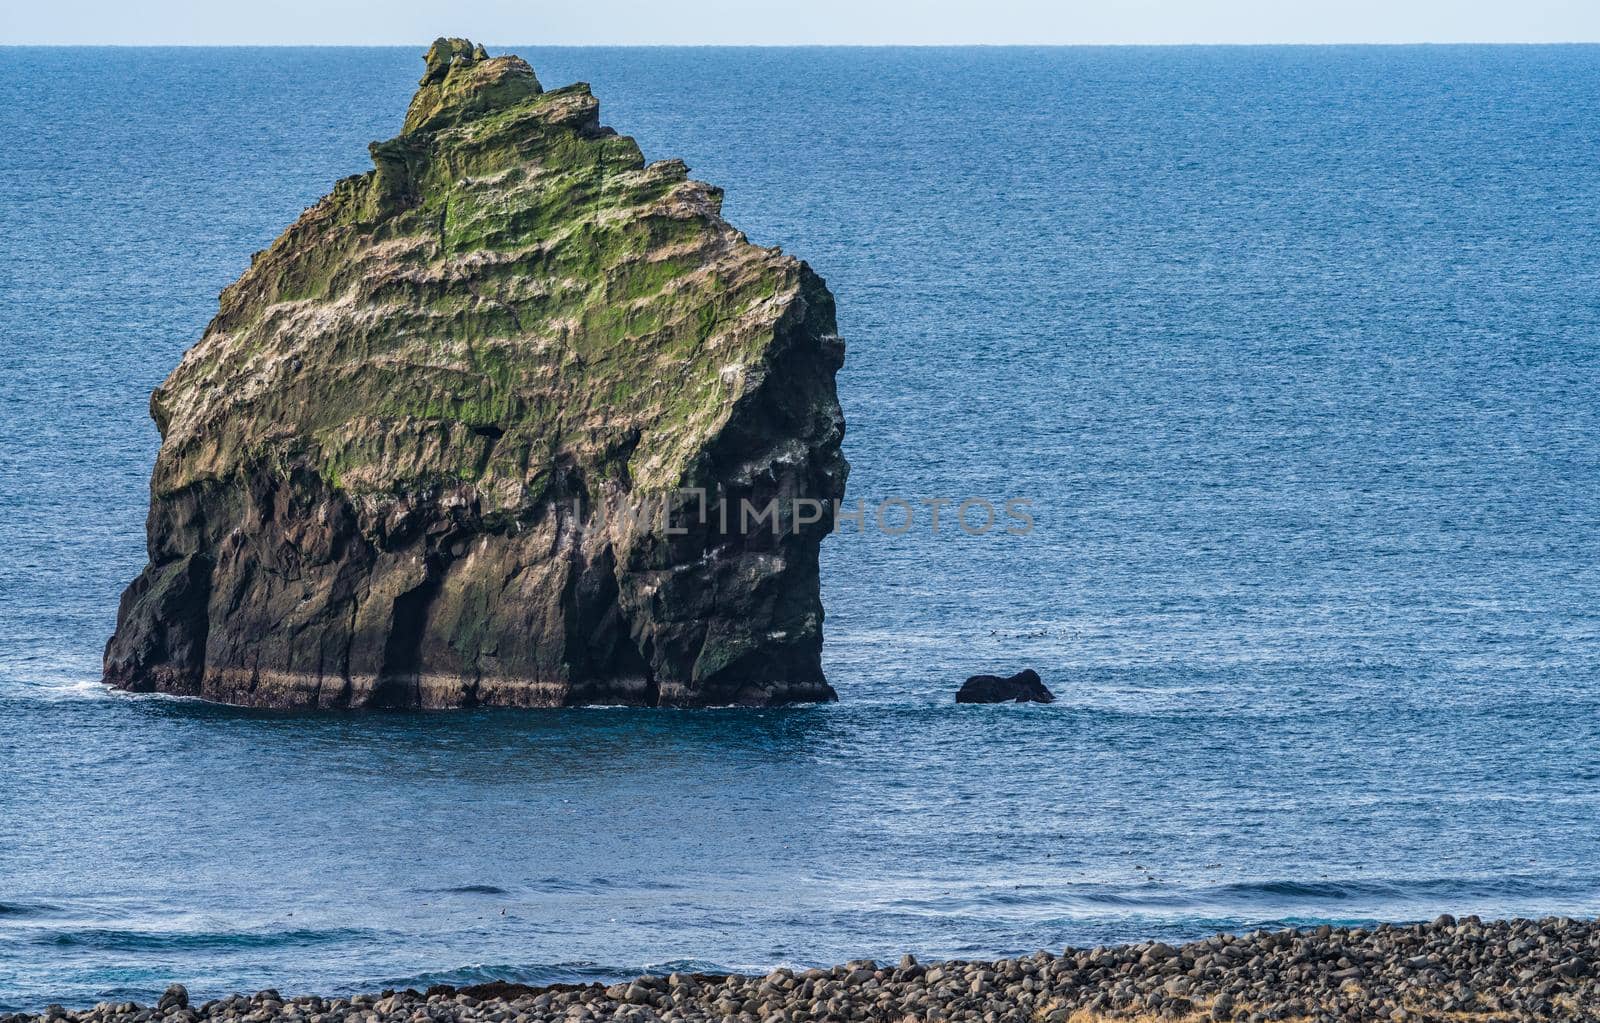 Huge boulder near the coastline with vast ocean by FerradalFCG